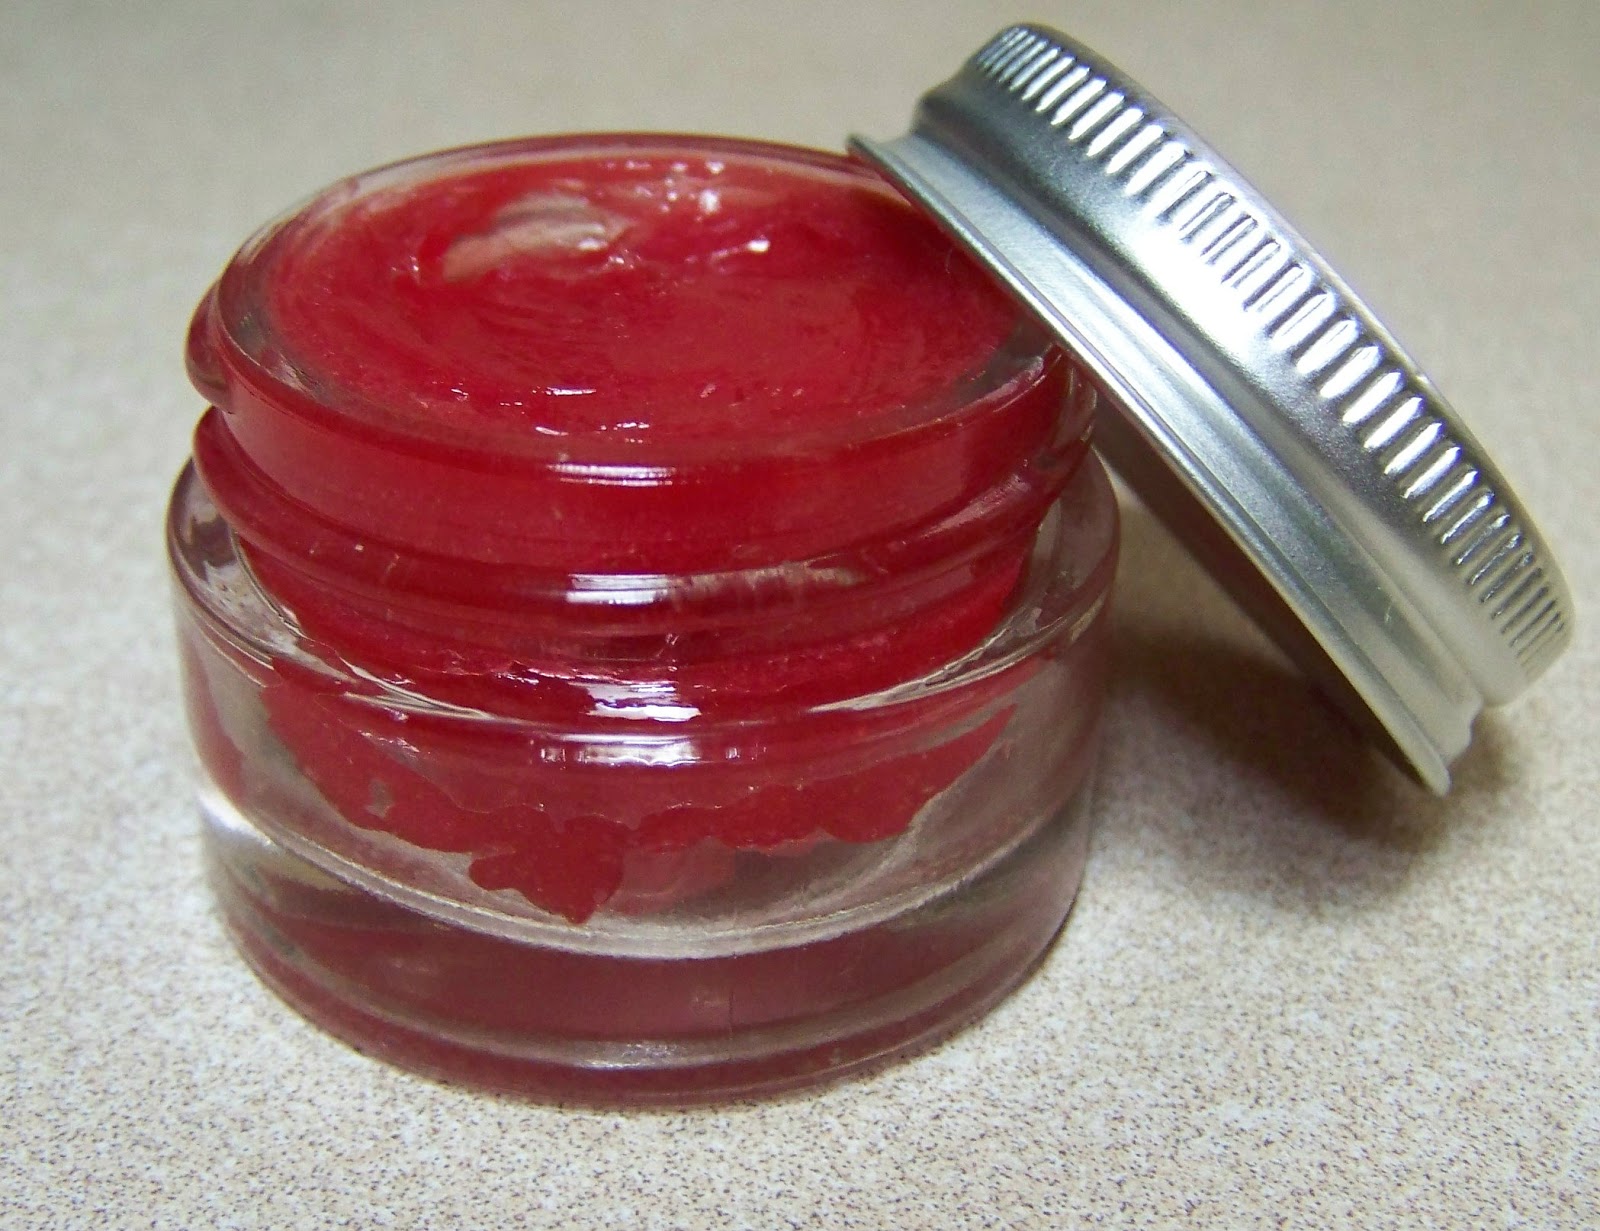 Homemade Sheer Cherry Lip Balm Easy to Make, Beautiful to Wear! 